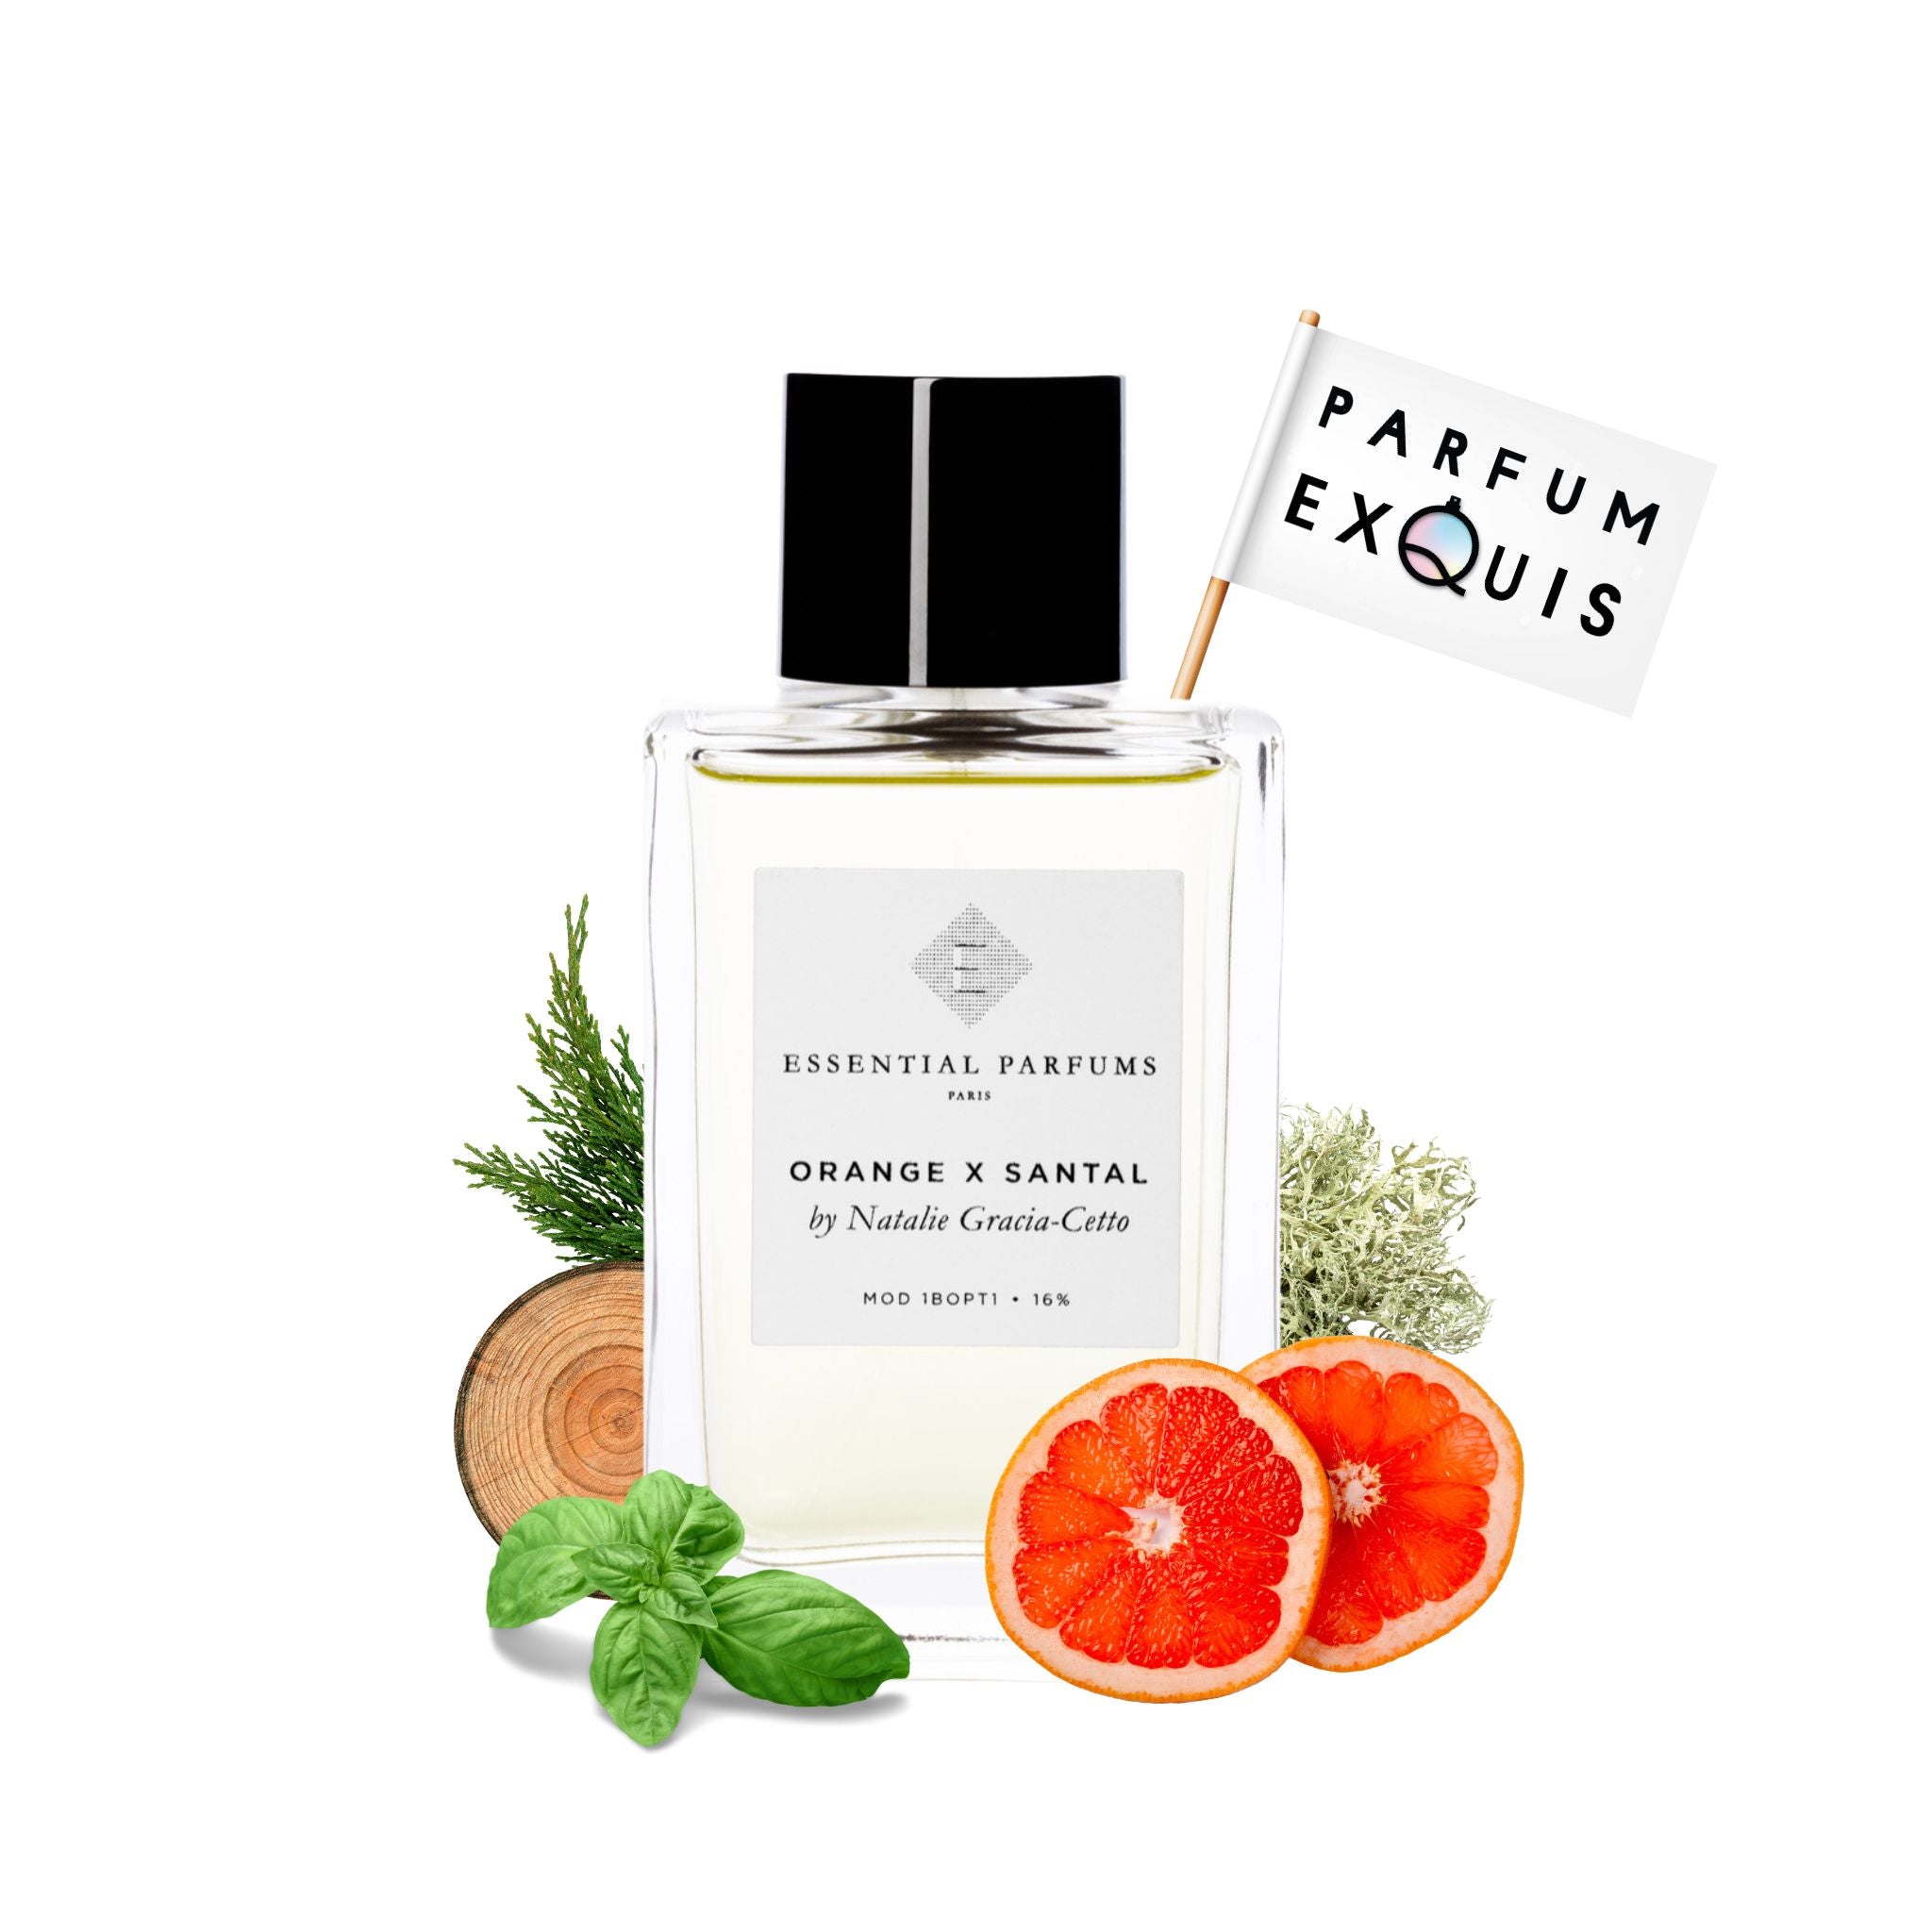 Orange X Santal Essential Parfums Notes